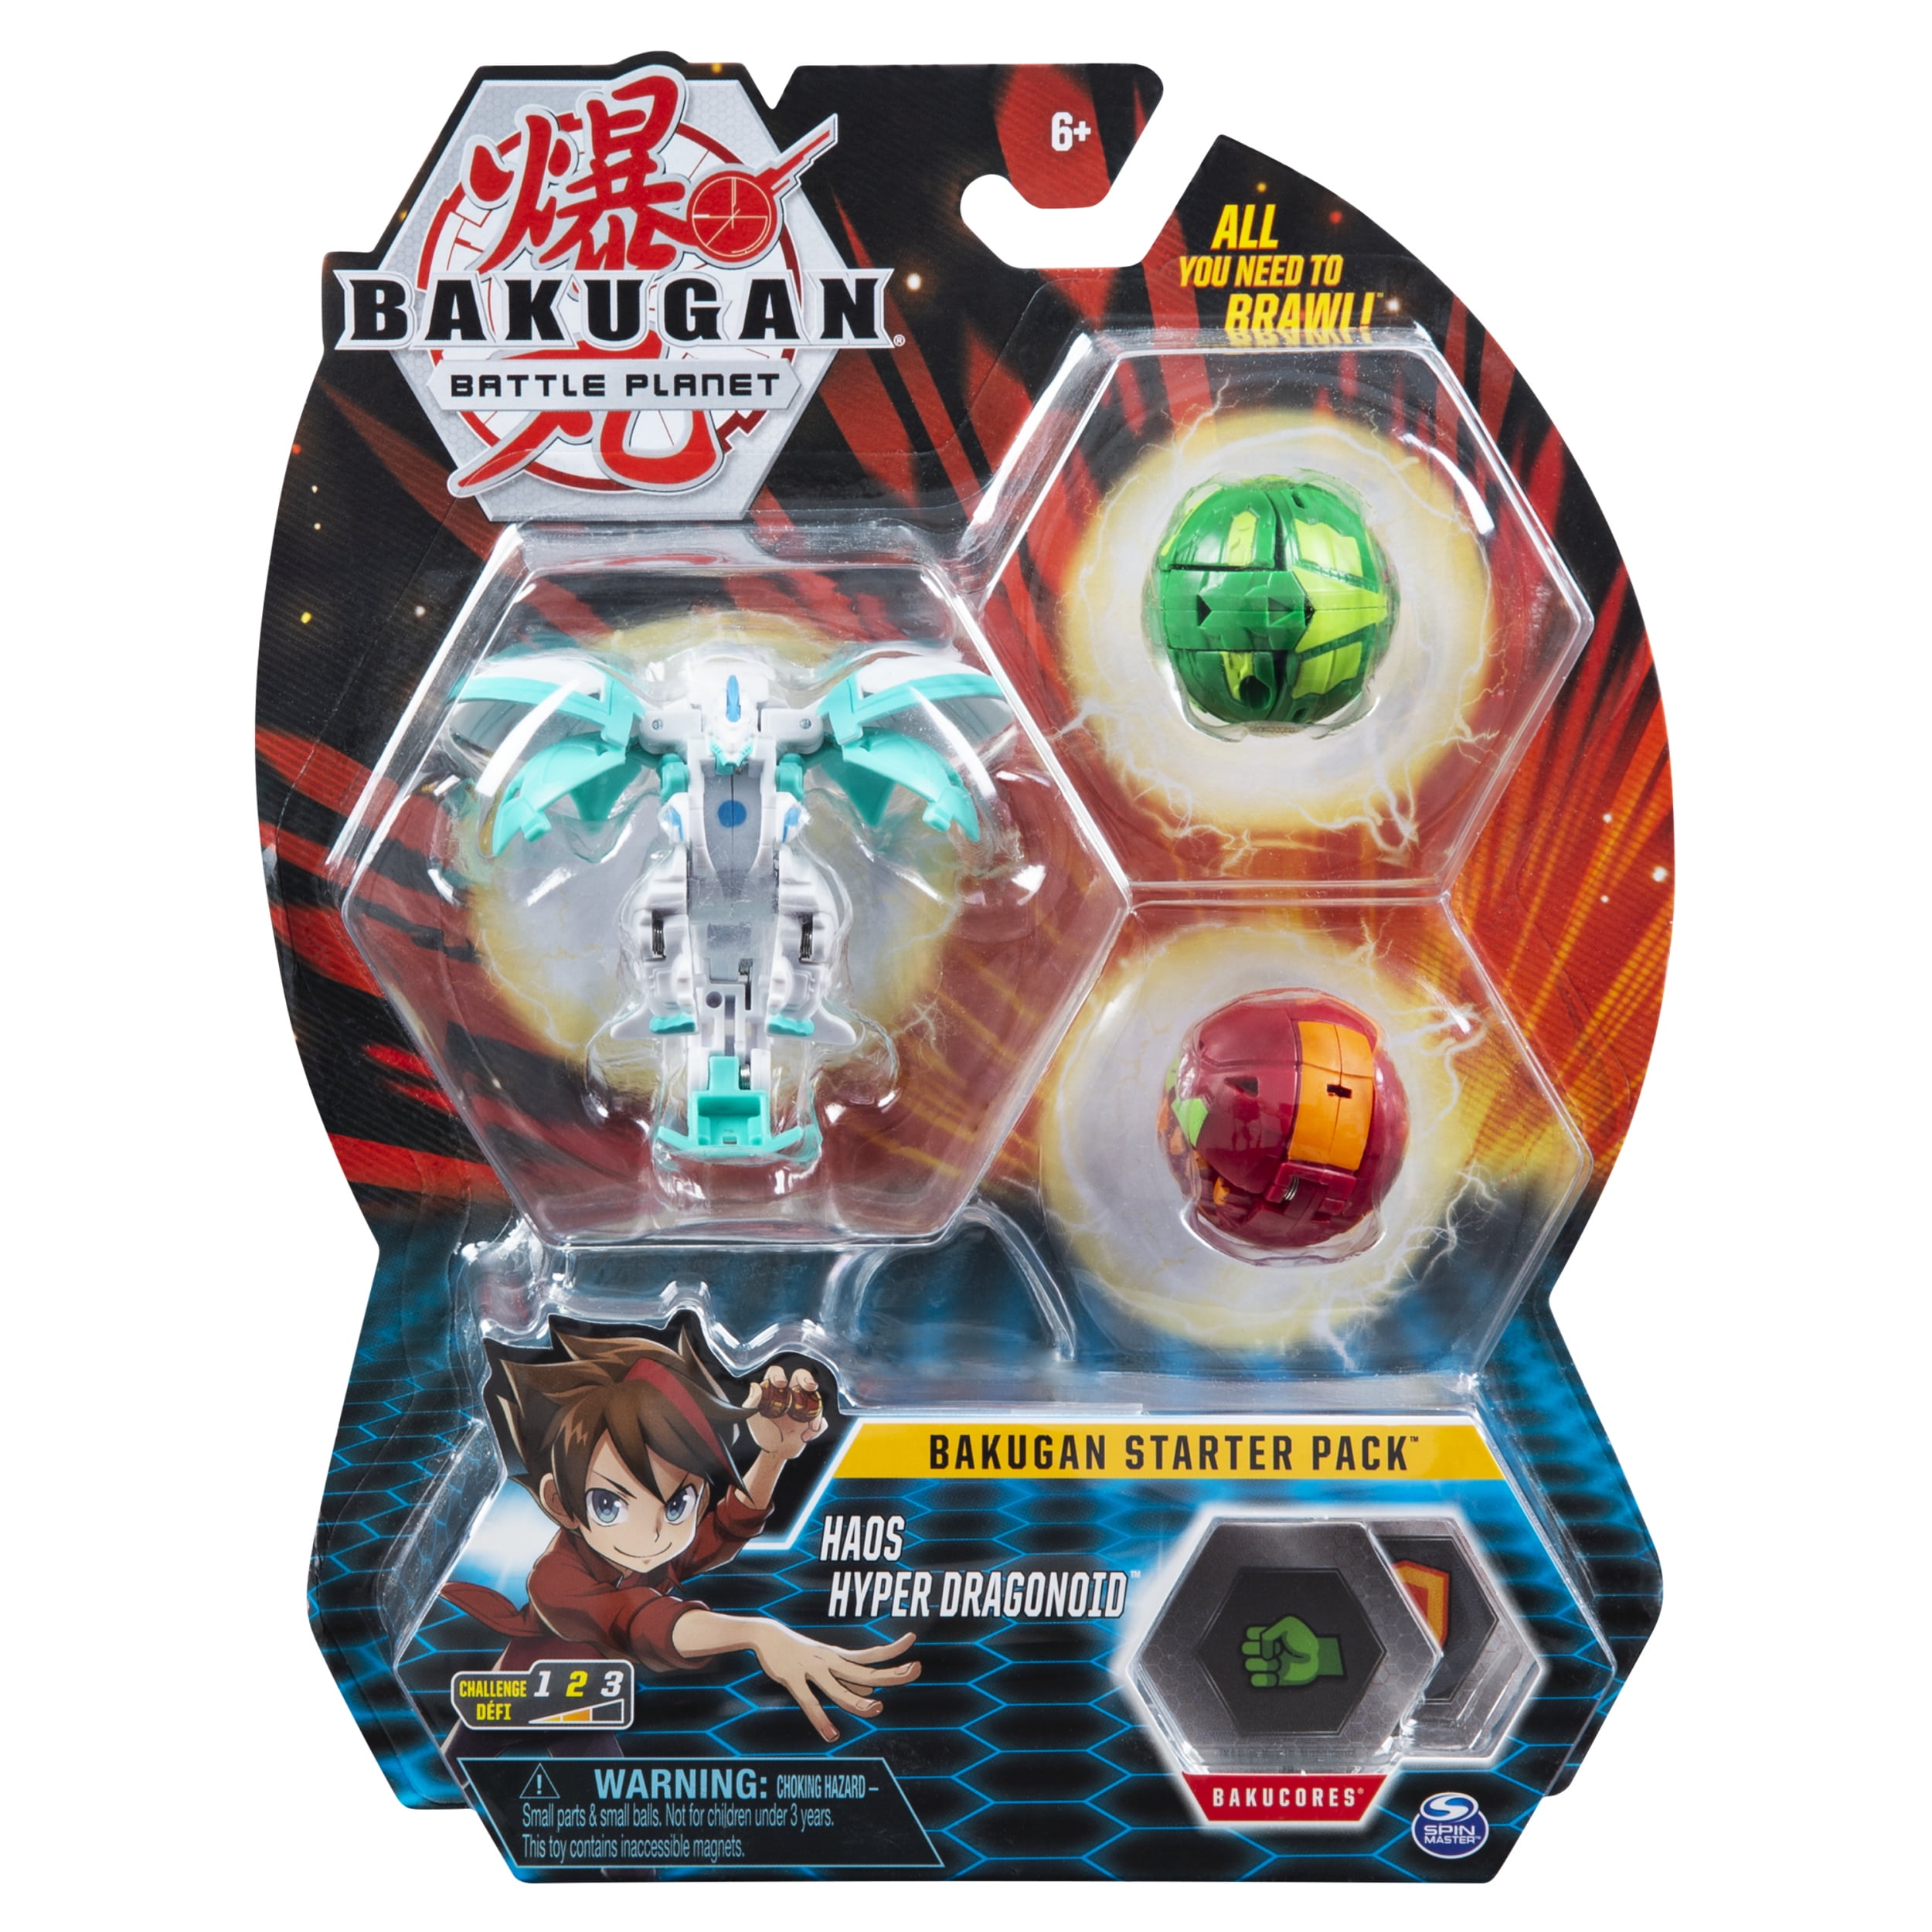 Bakugan Battle Planet Dragonoid Deluxe Action Figure B5 for sale online 